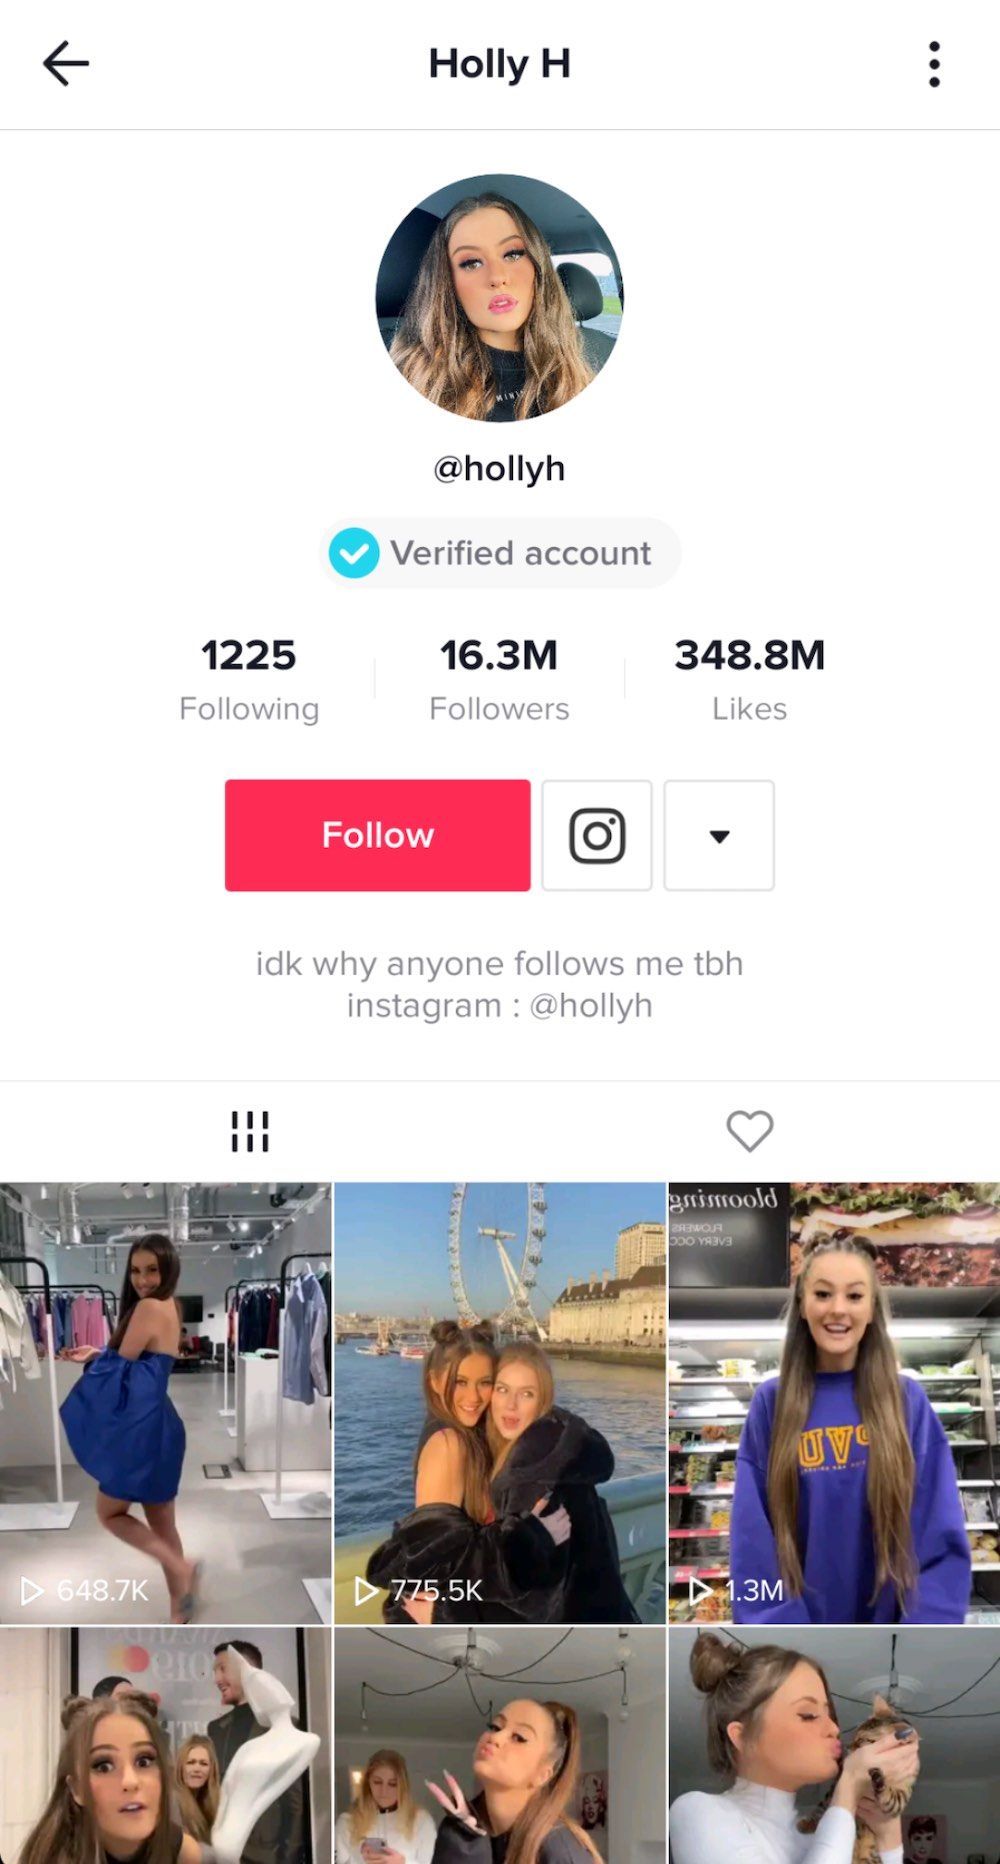 Holly H is a TikTok star with 16.3 million followers.